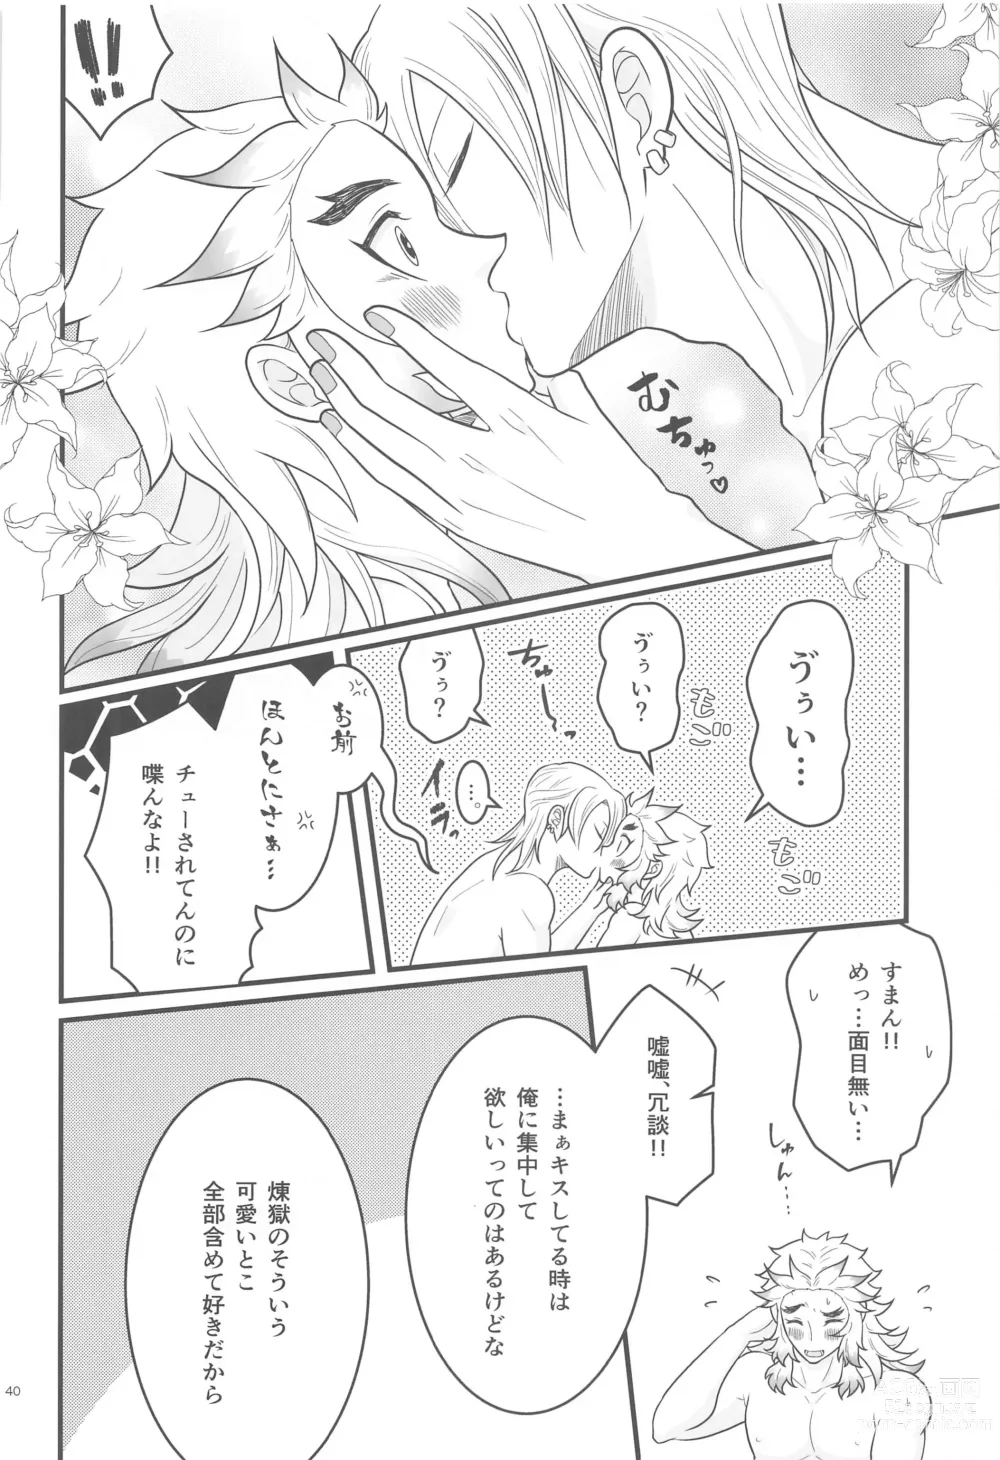 Page 39 of doujinshi Flamboyant Darling